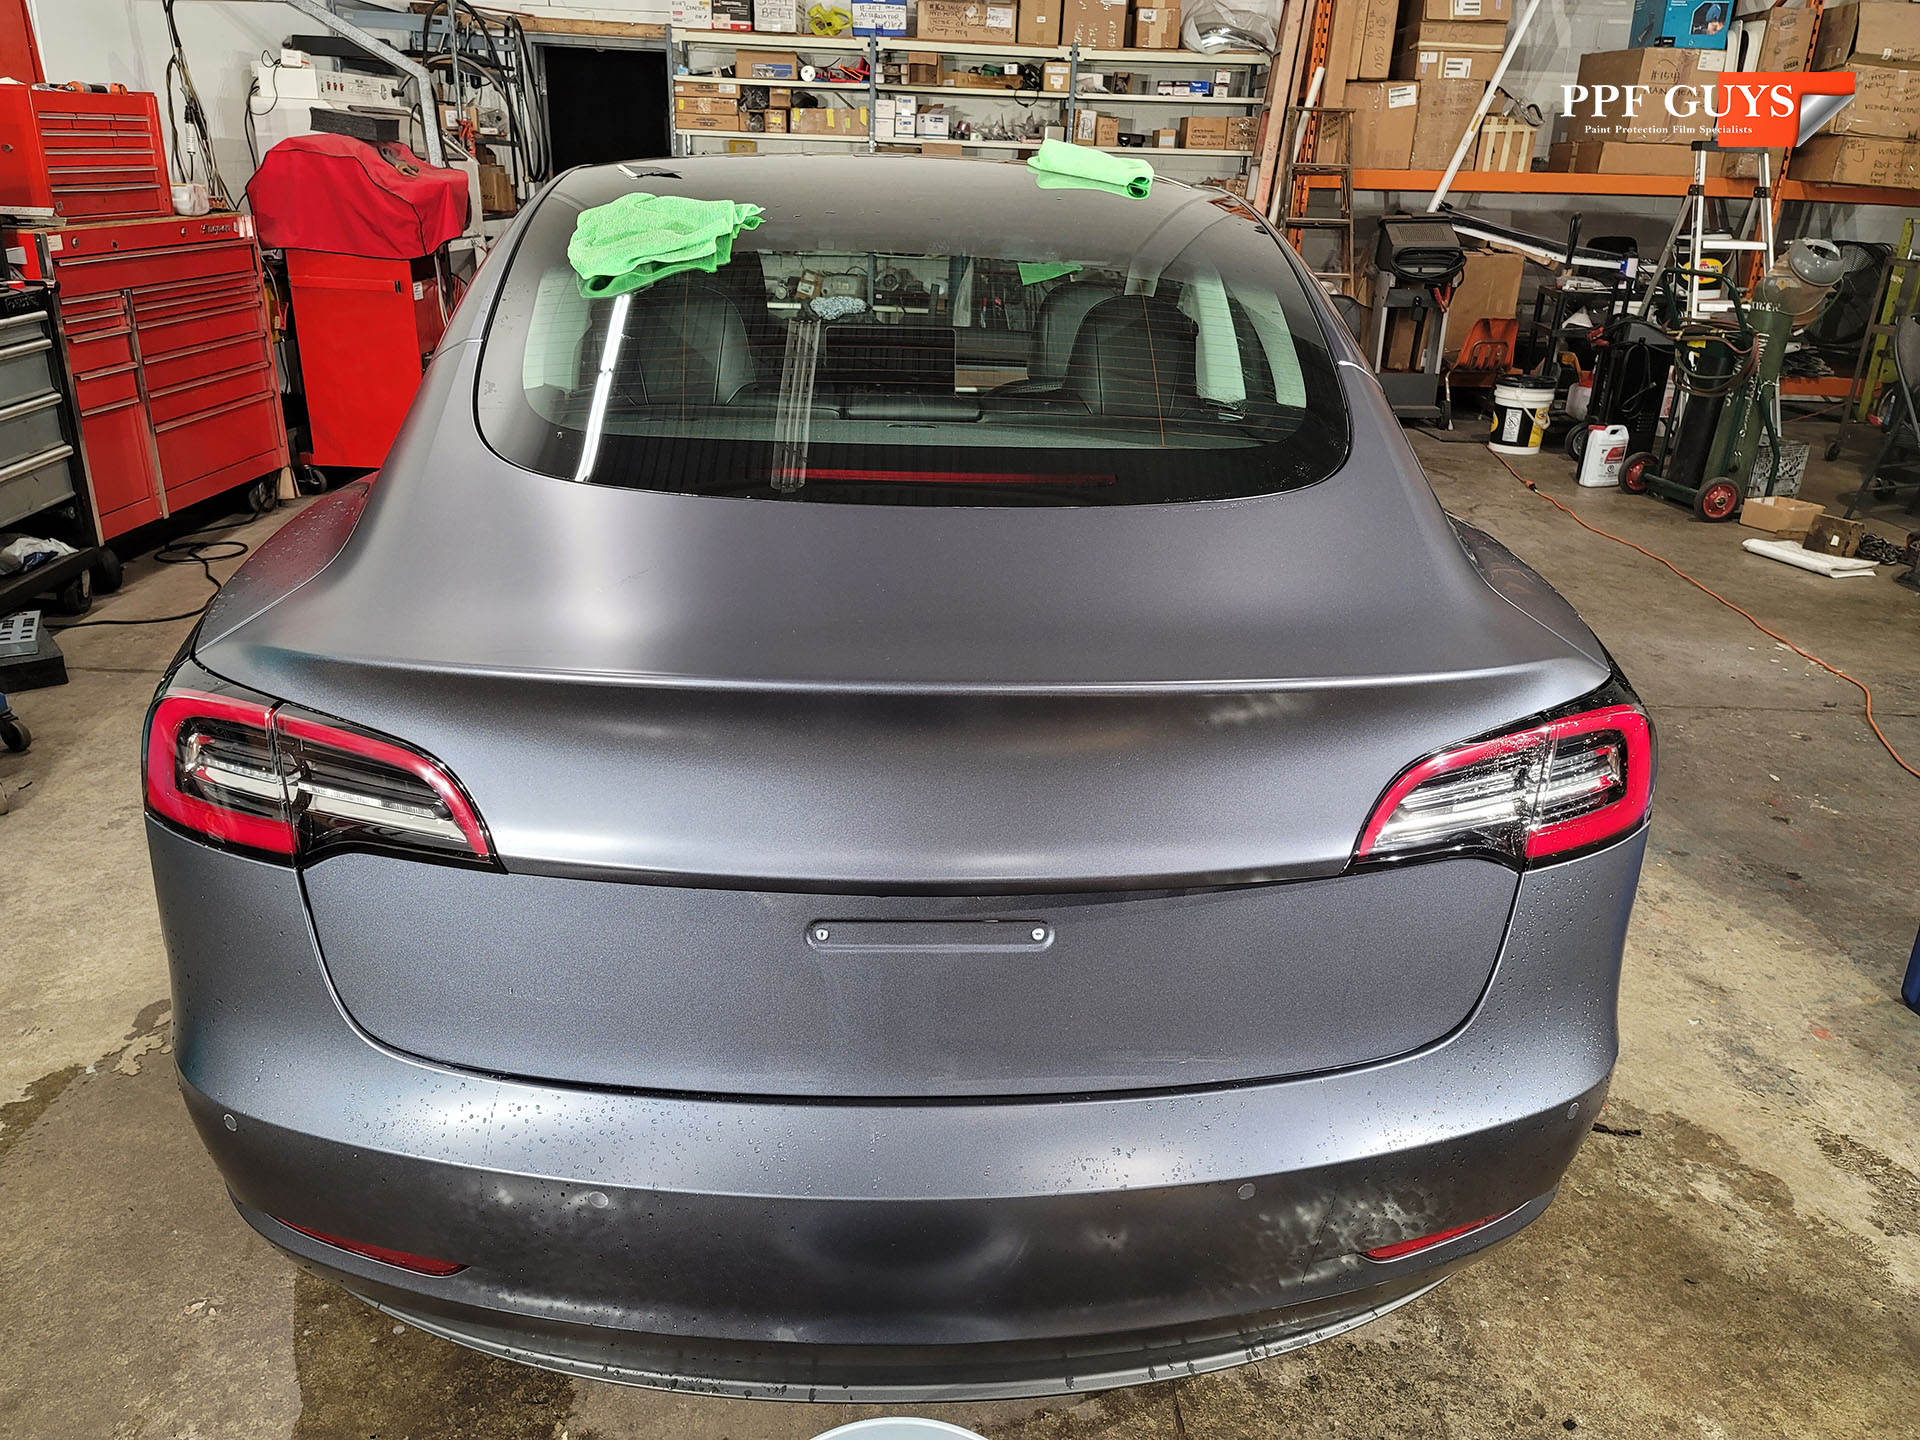 PPF Guys Tesla Model 3 Xpel Stealth (13).jpg